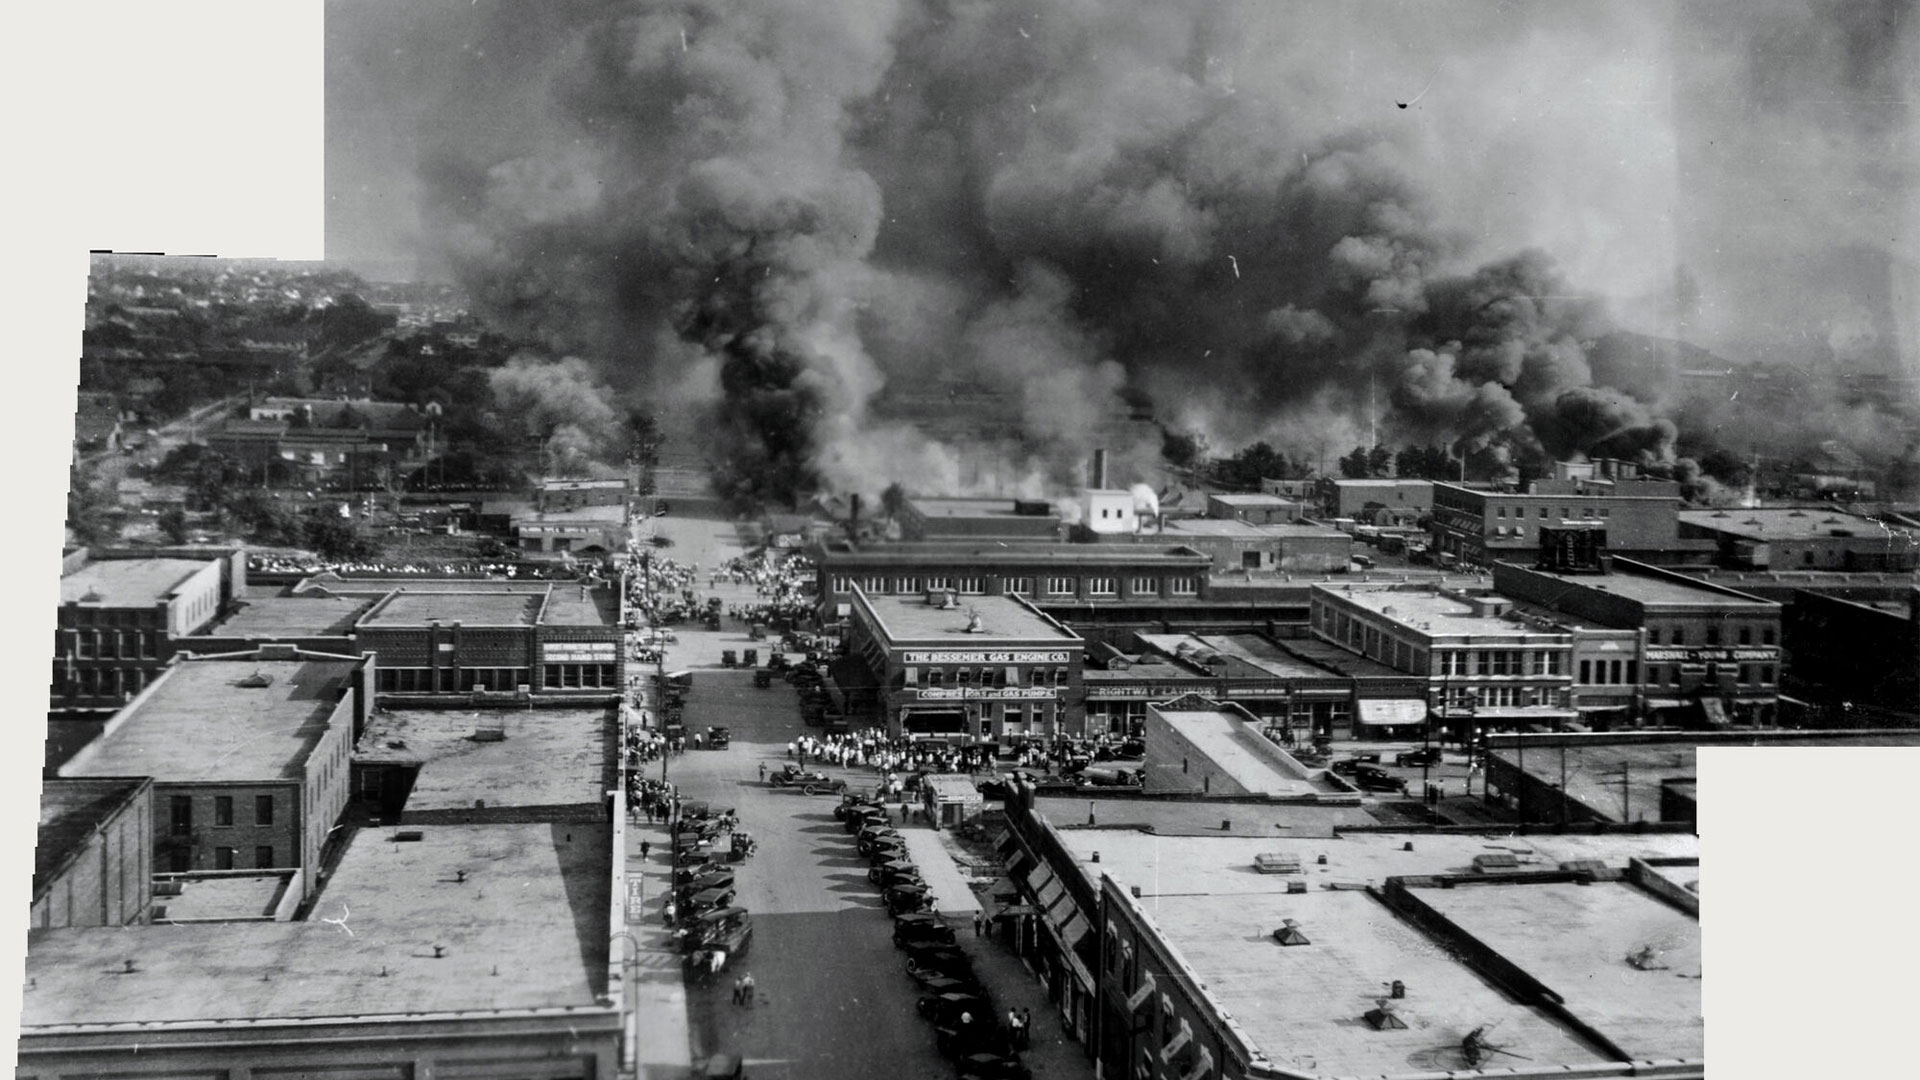 1921 Tulsa Massacre Survivors Demand Justice Against the State of Oklahoma